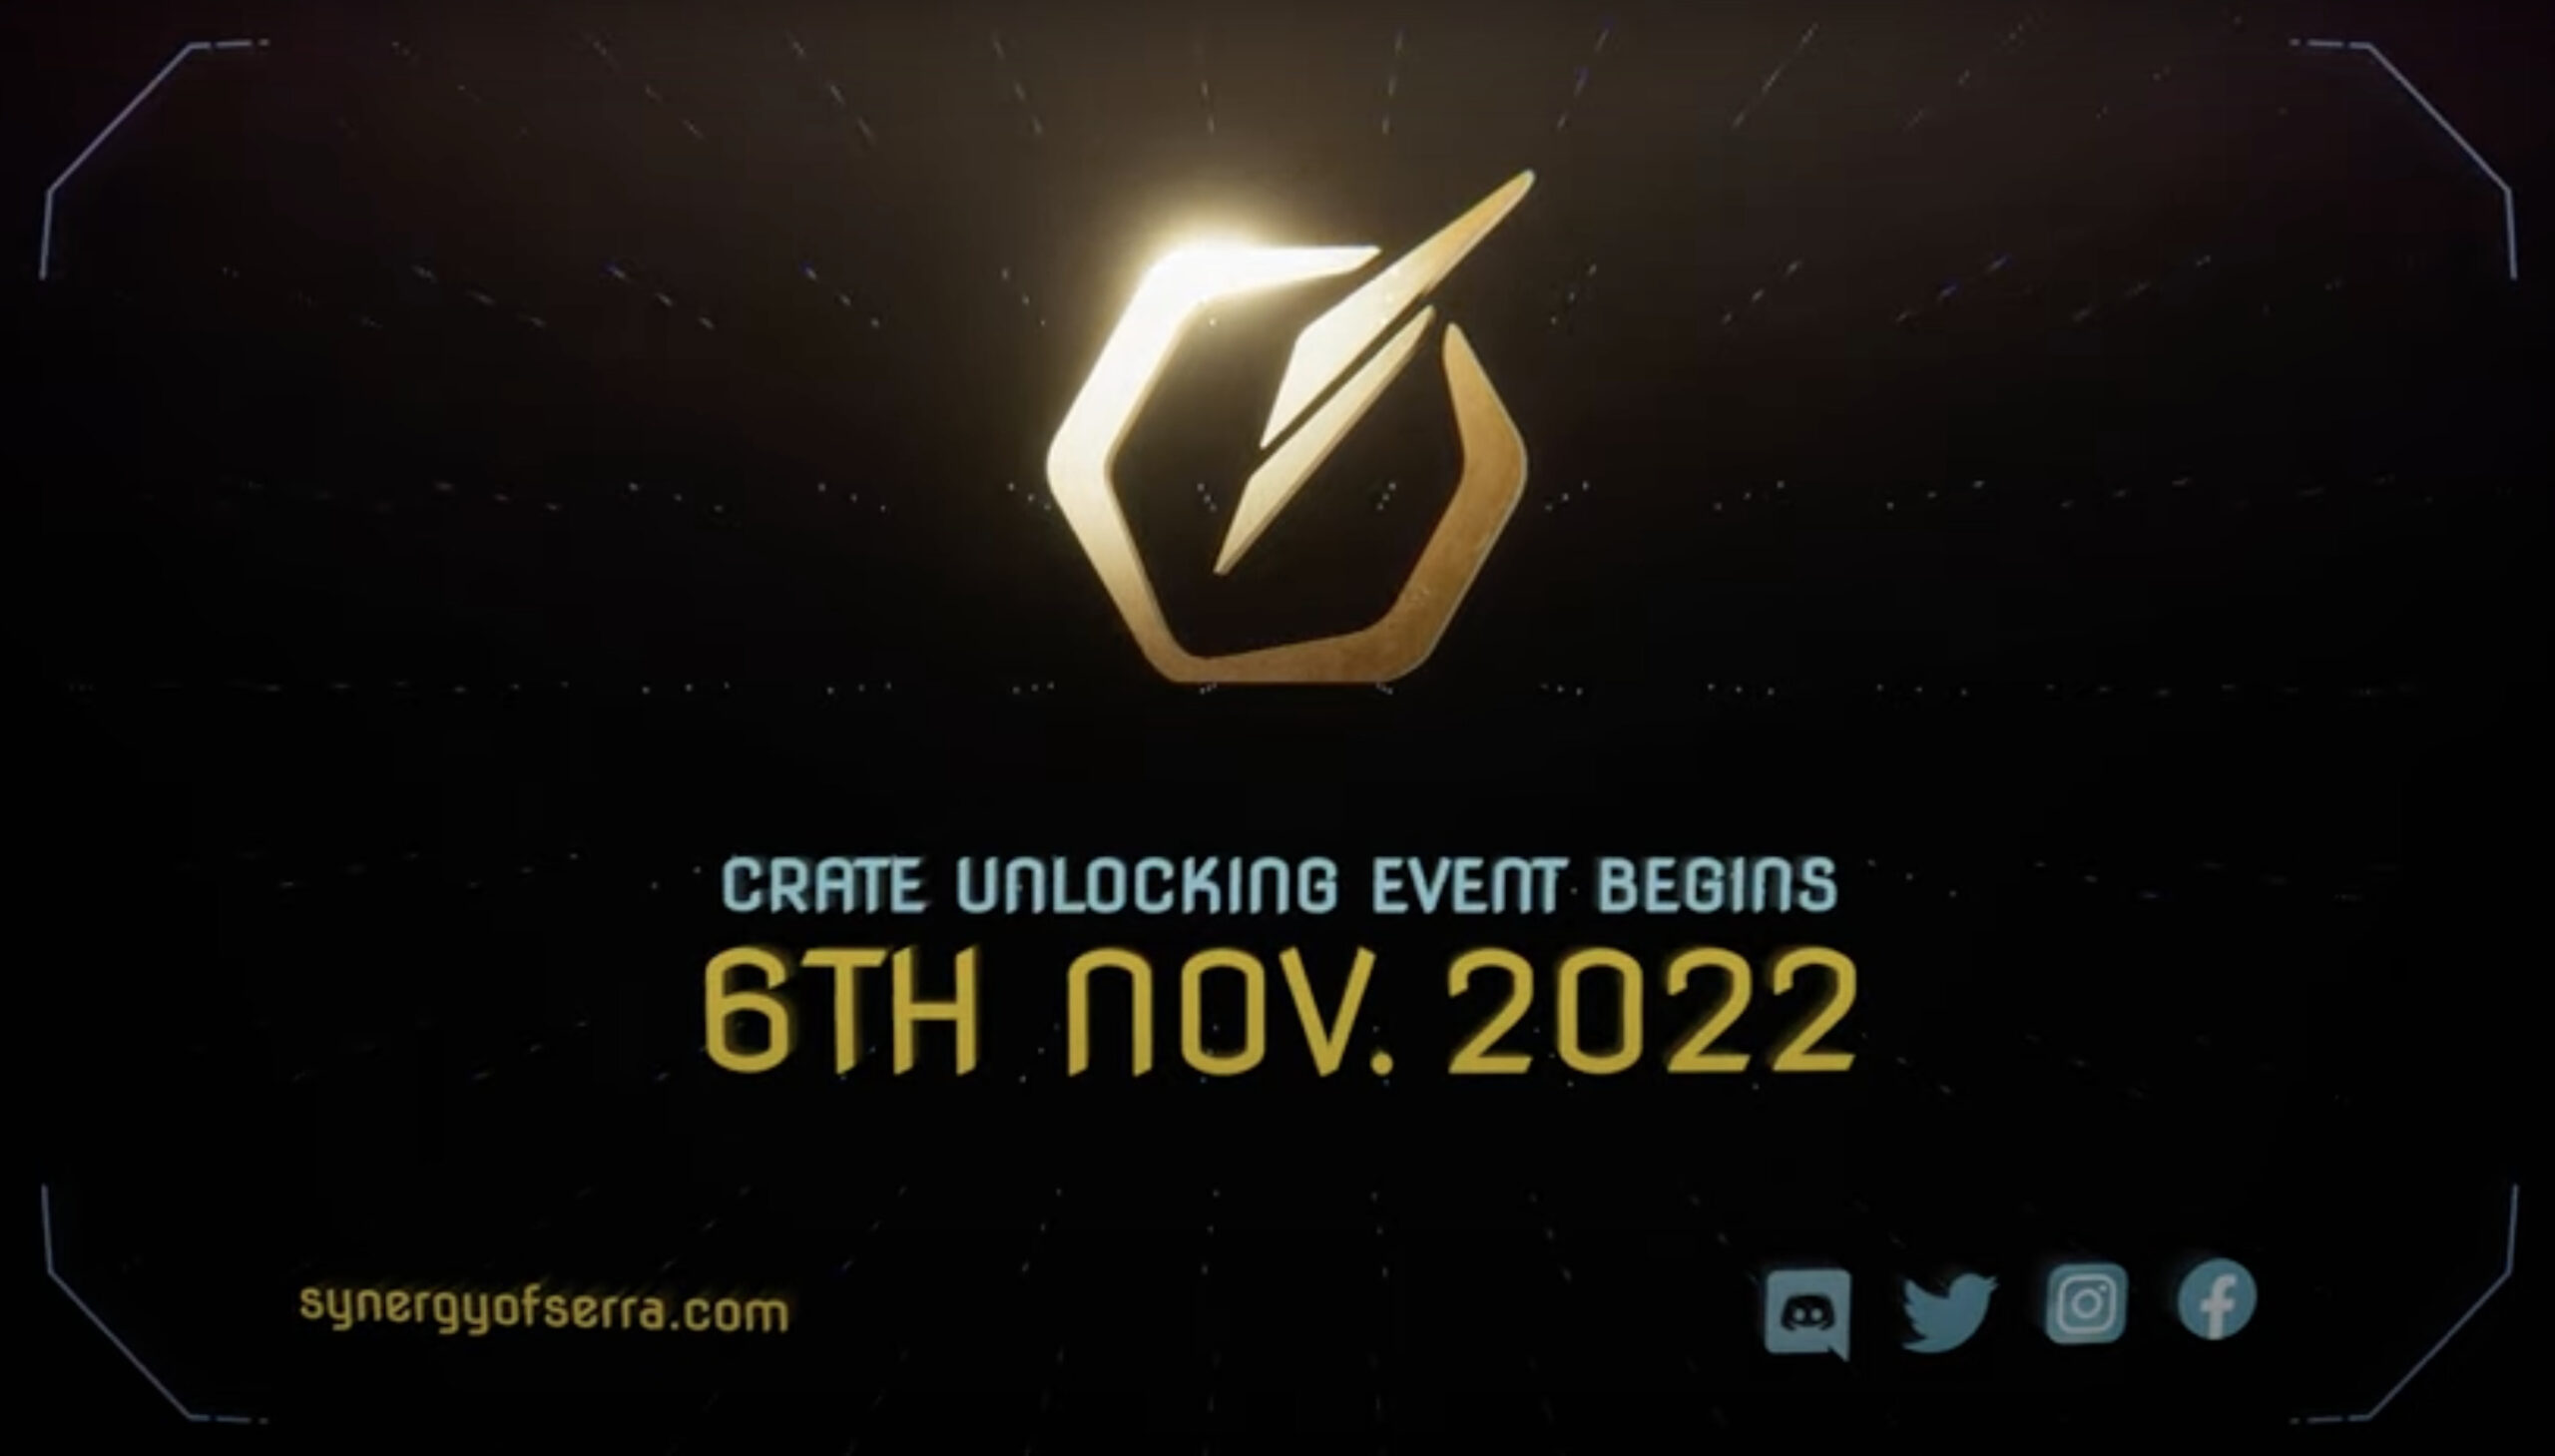 Deposit Synergy of Serra Crates for Unlocking